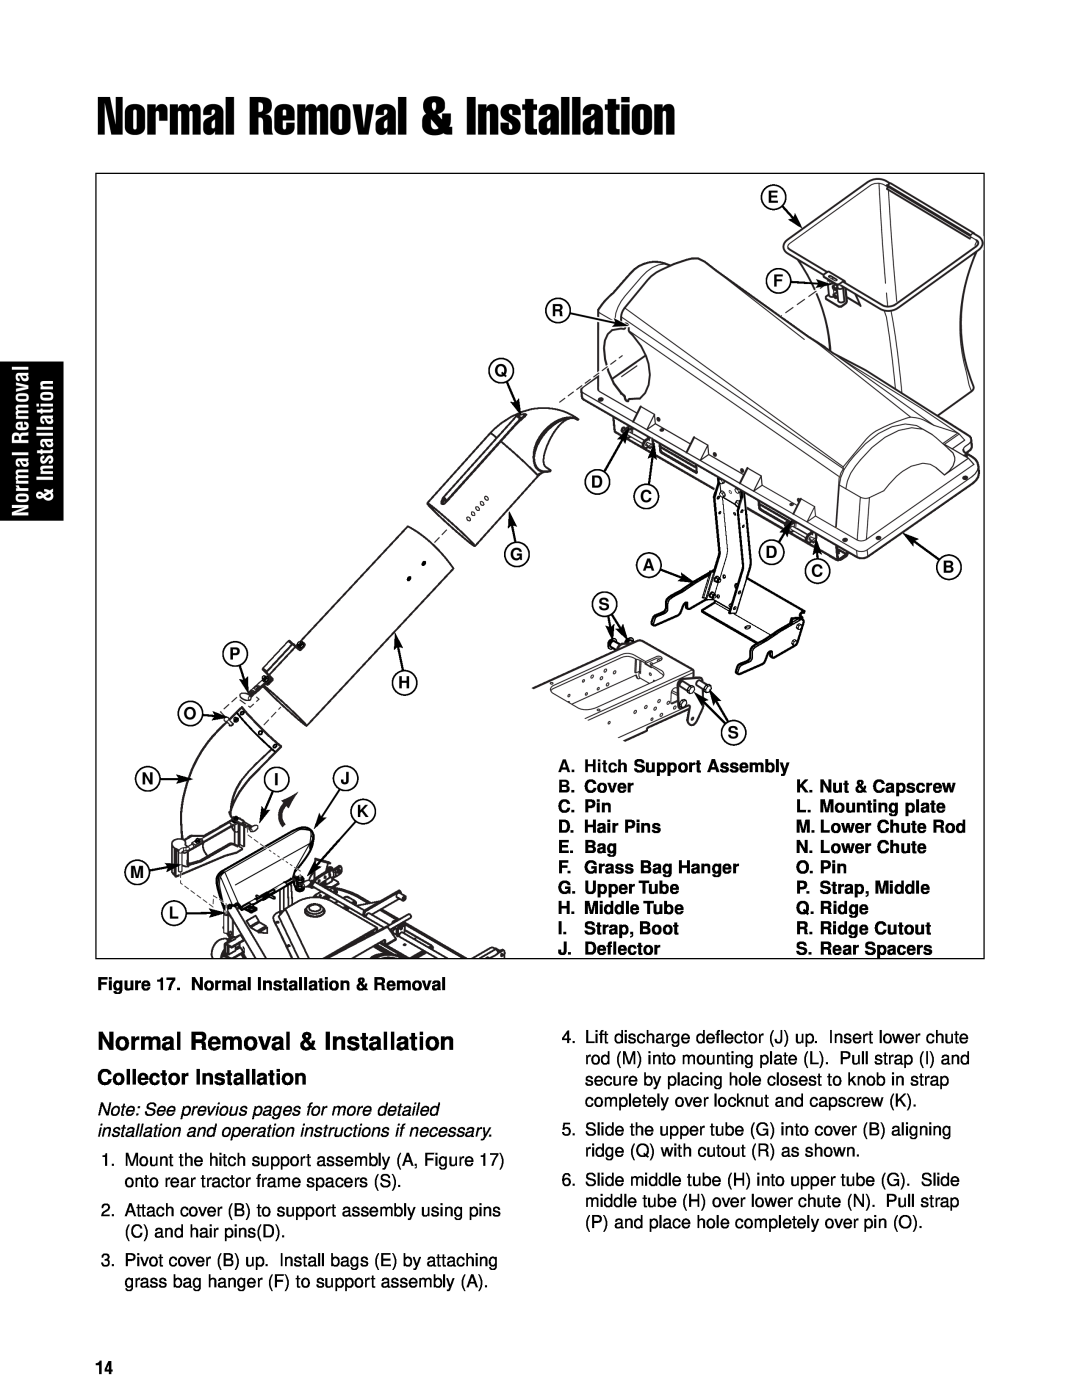 Briggs & Stratton 1695354 manual Normal Removal & Installation, Collector Installation 